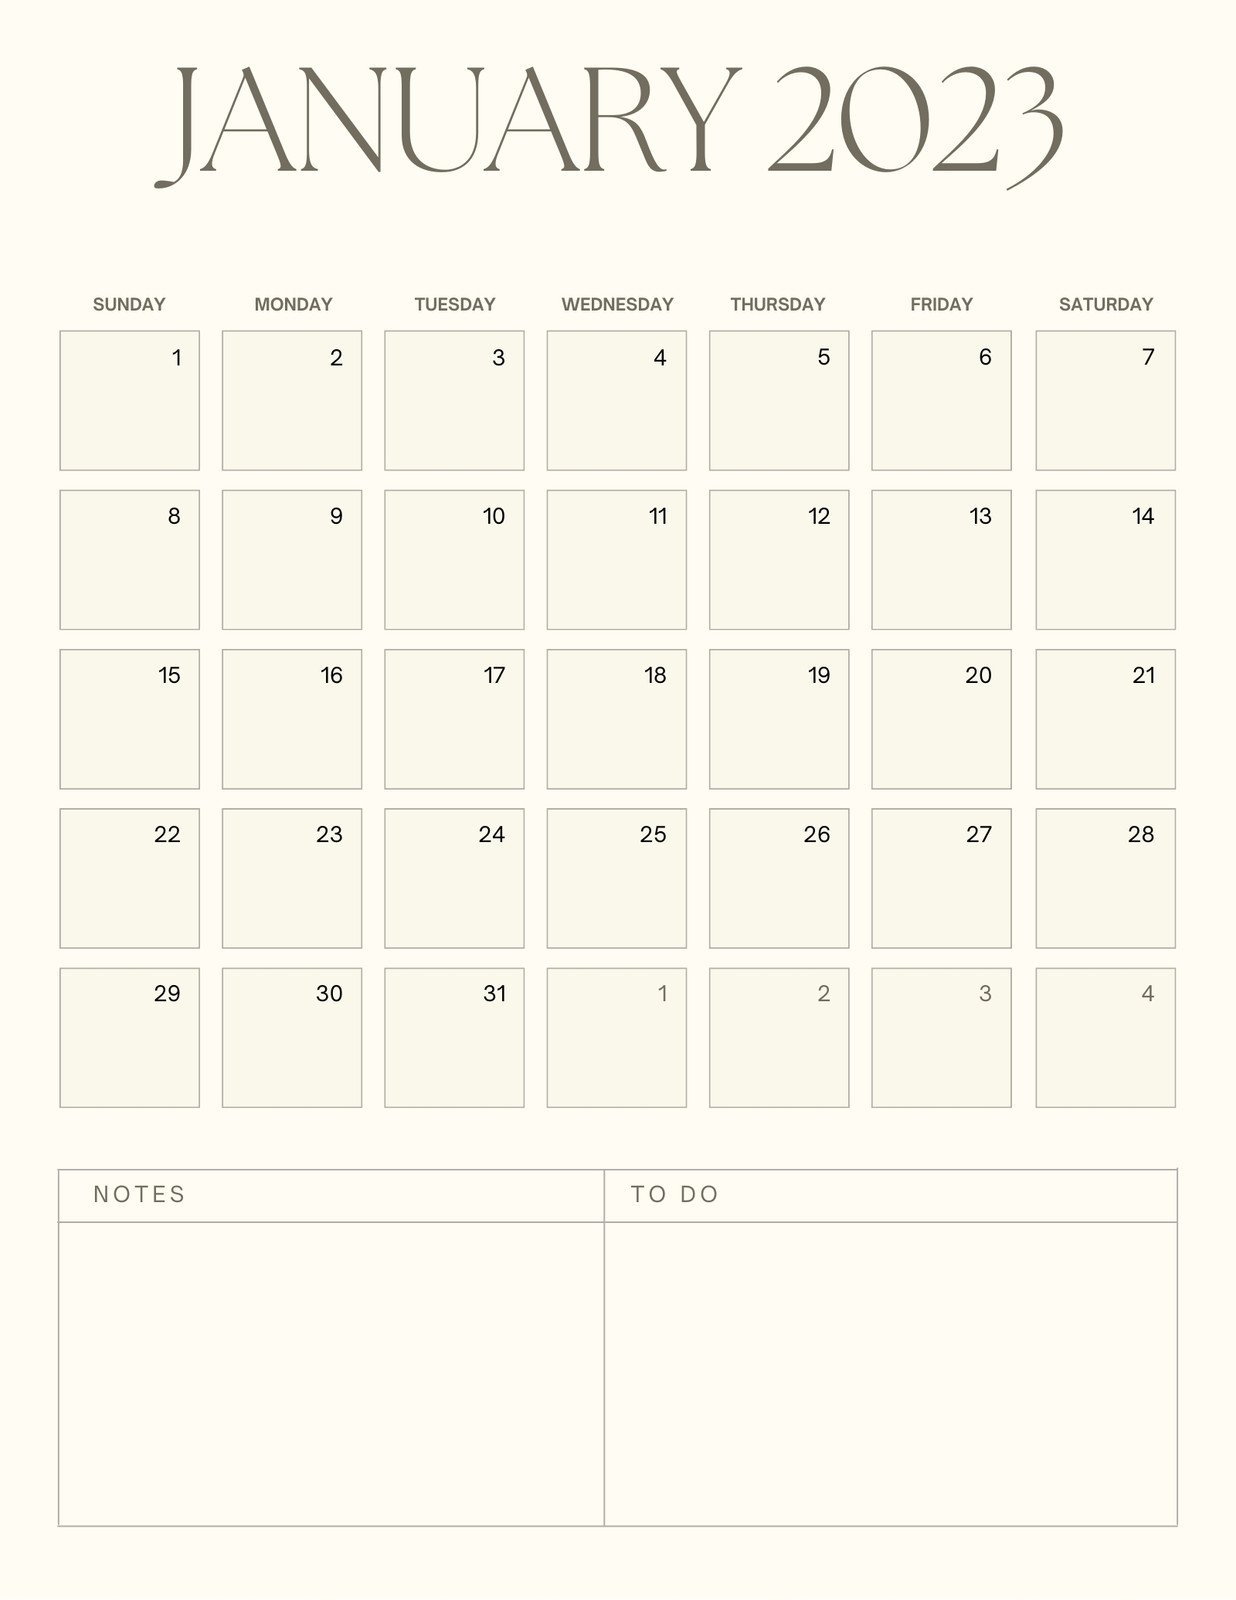 Free, Printable, Customizable Monthly Calendar Templates | Canva